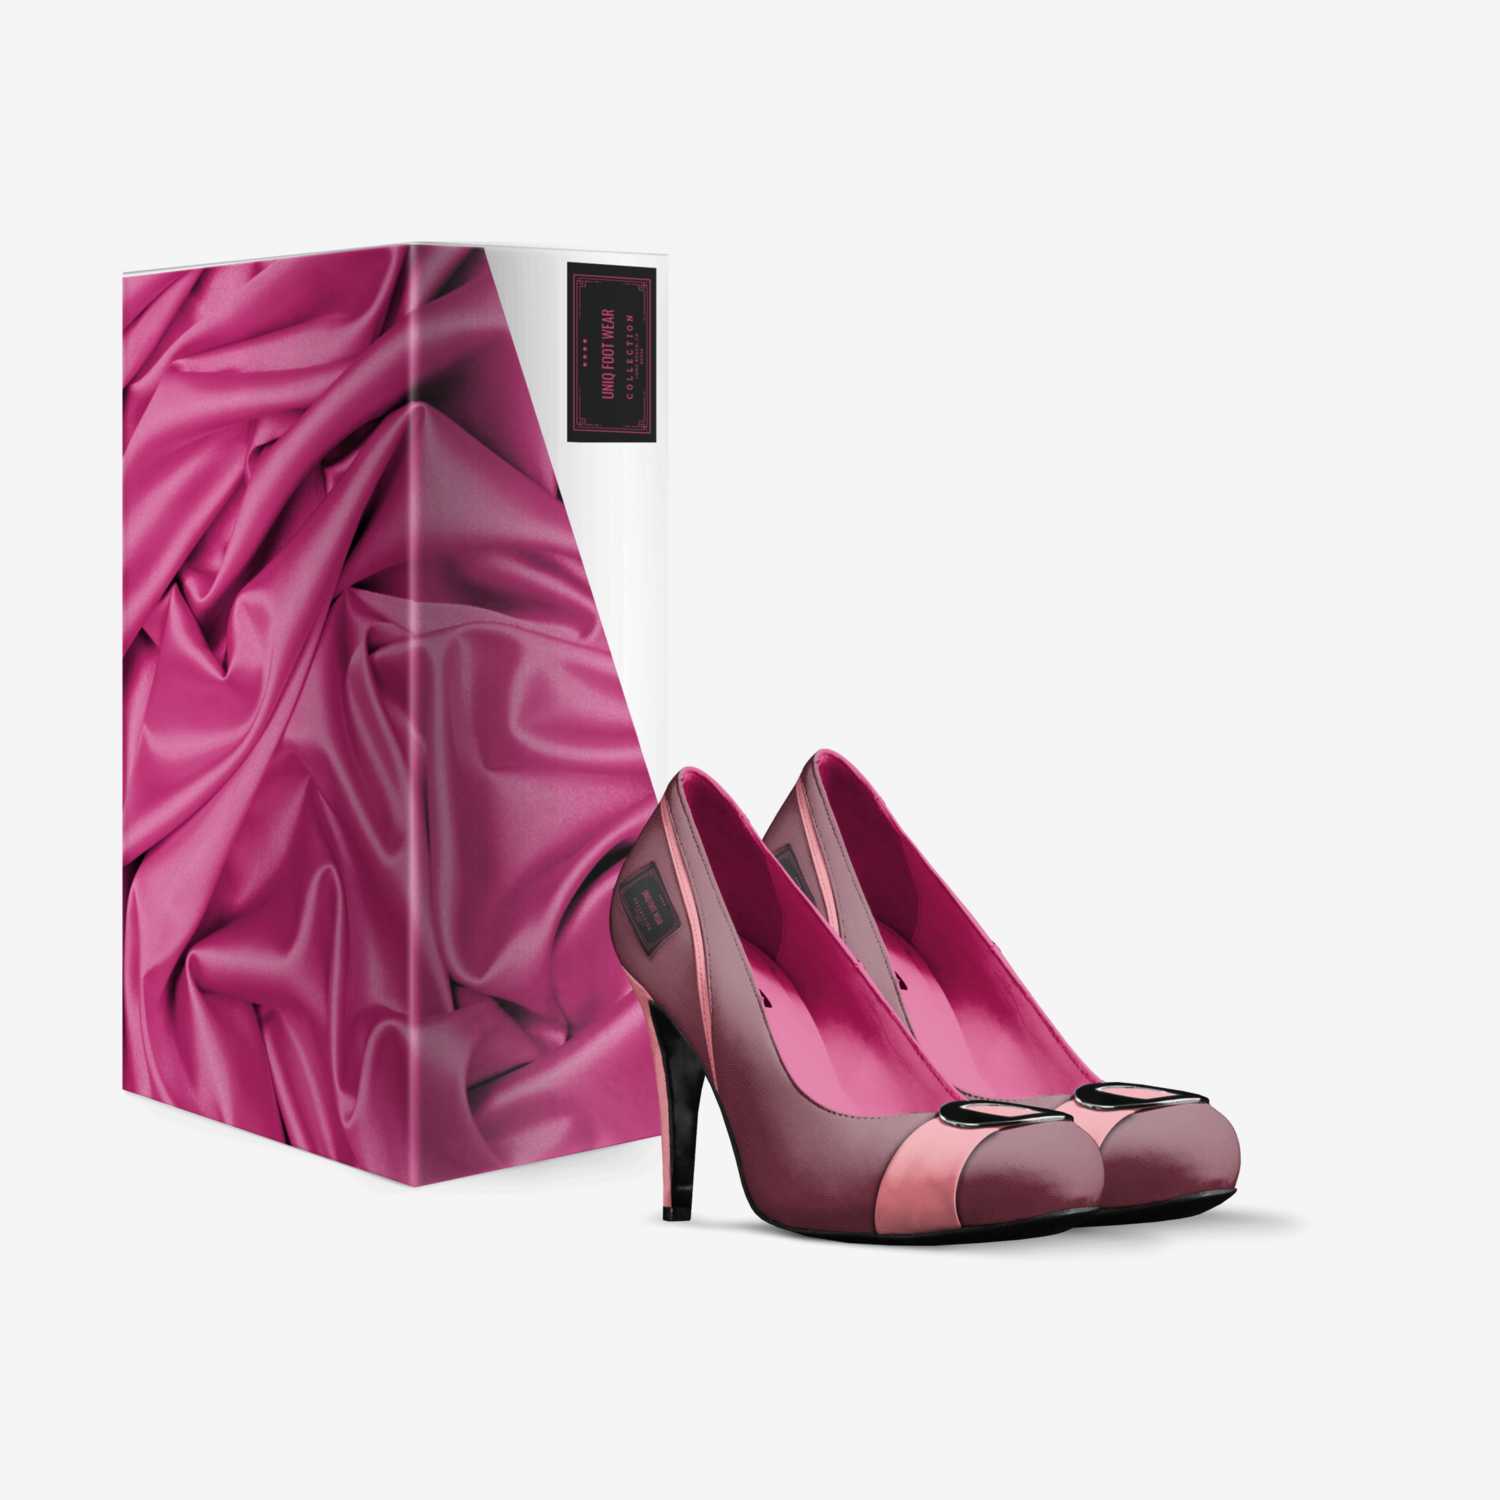 Uniq Foot Wear custom made in Italy shoes by Jethro Tsamaesi | Box view